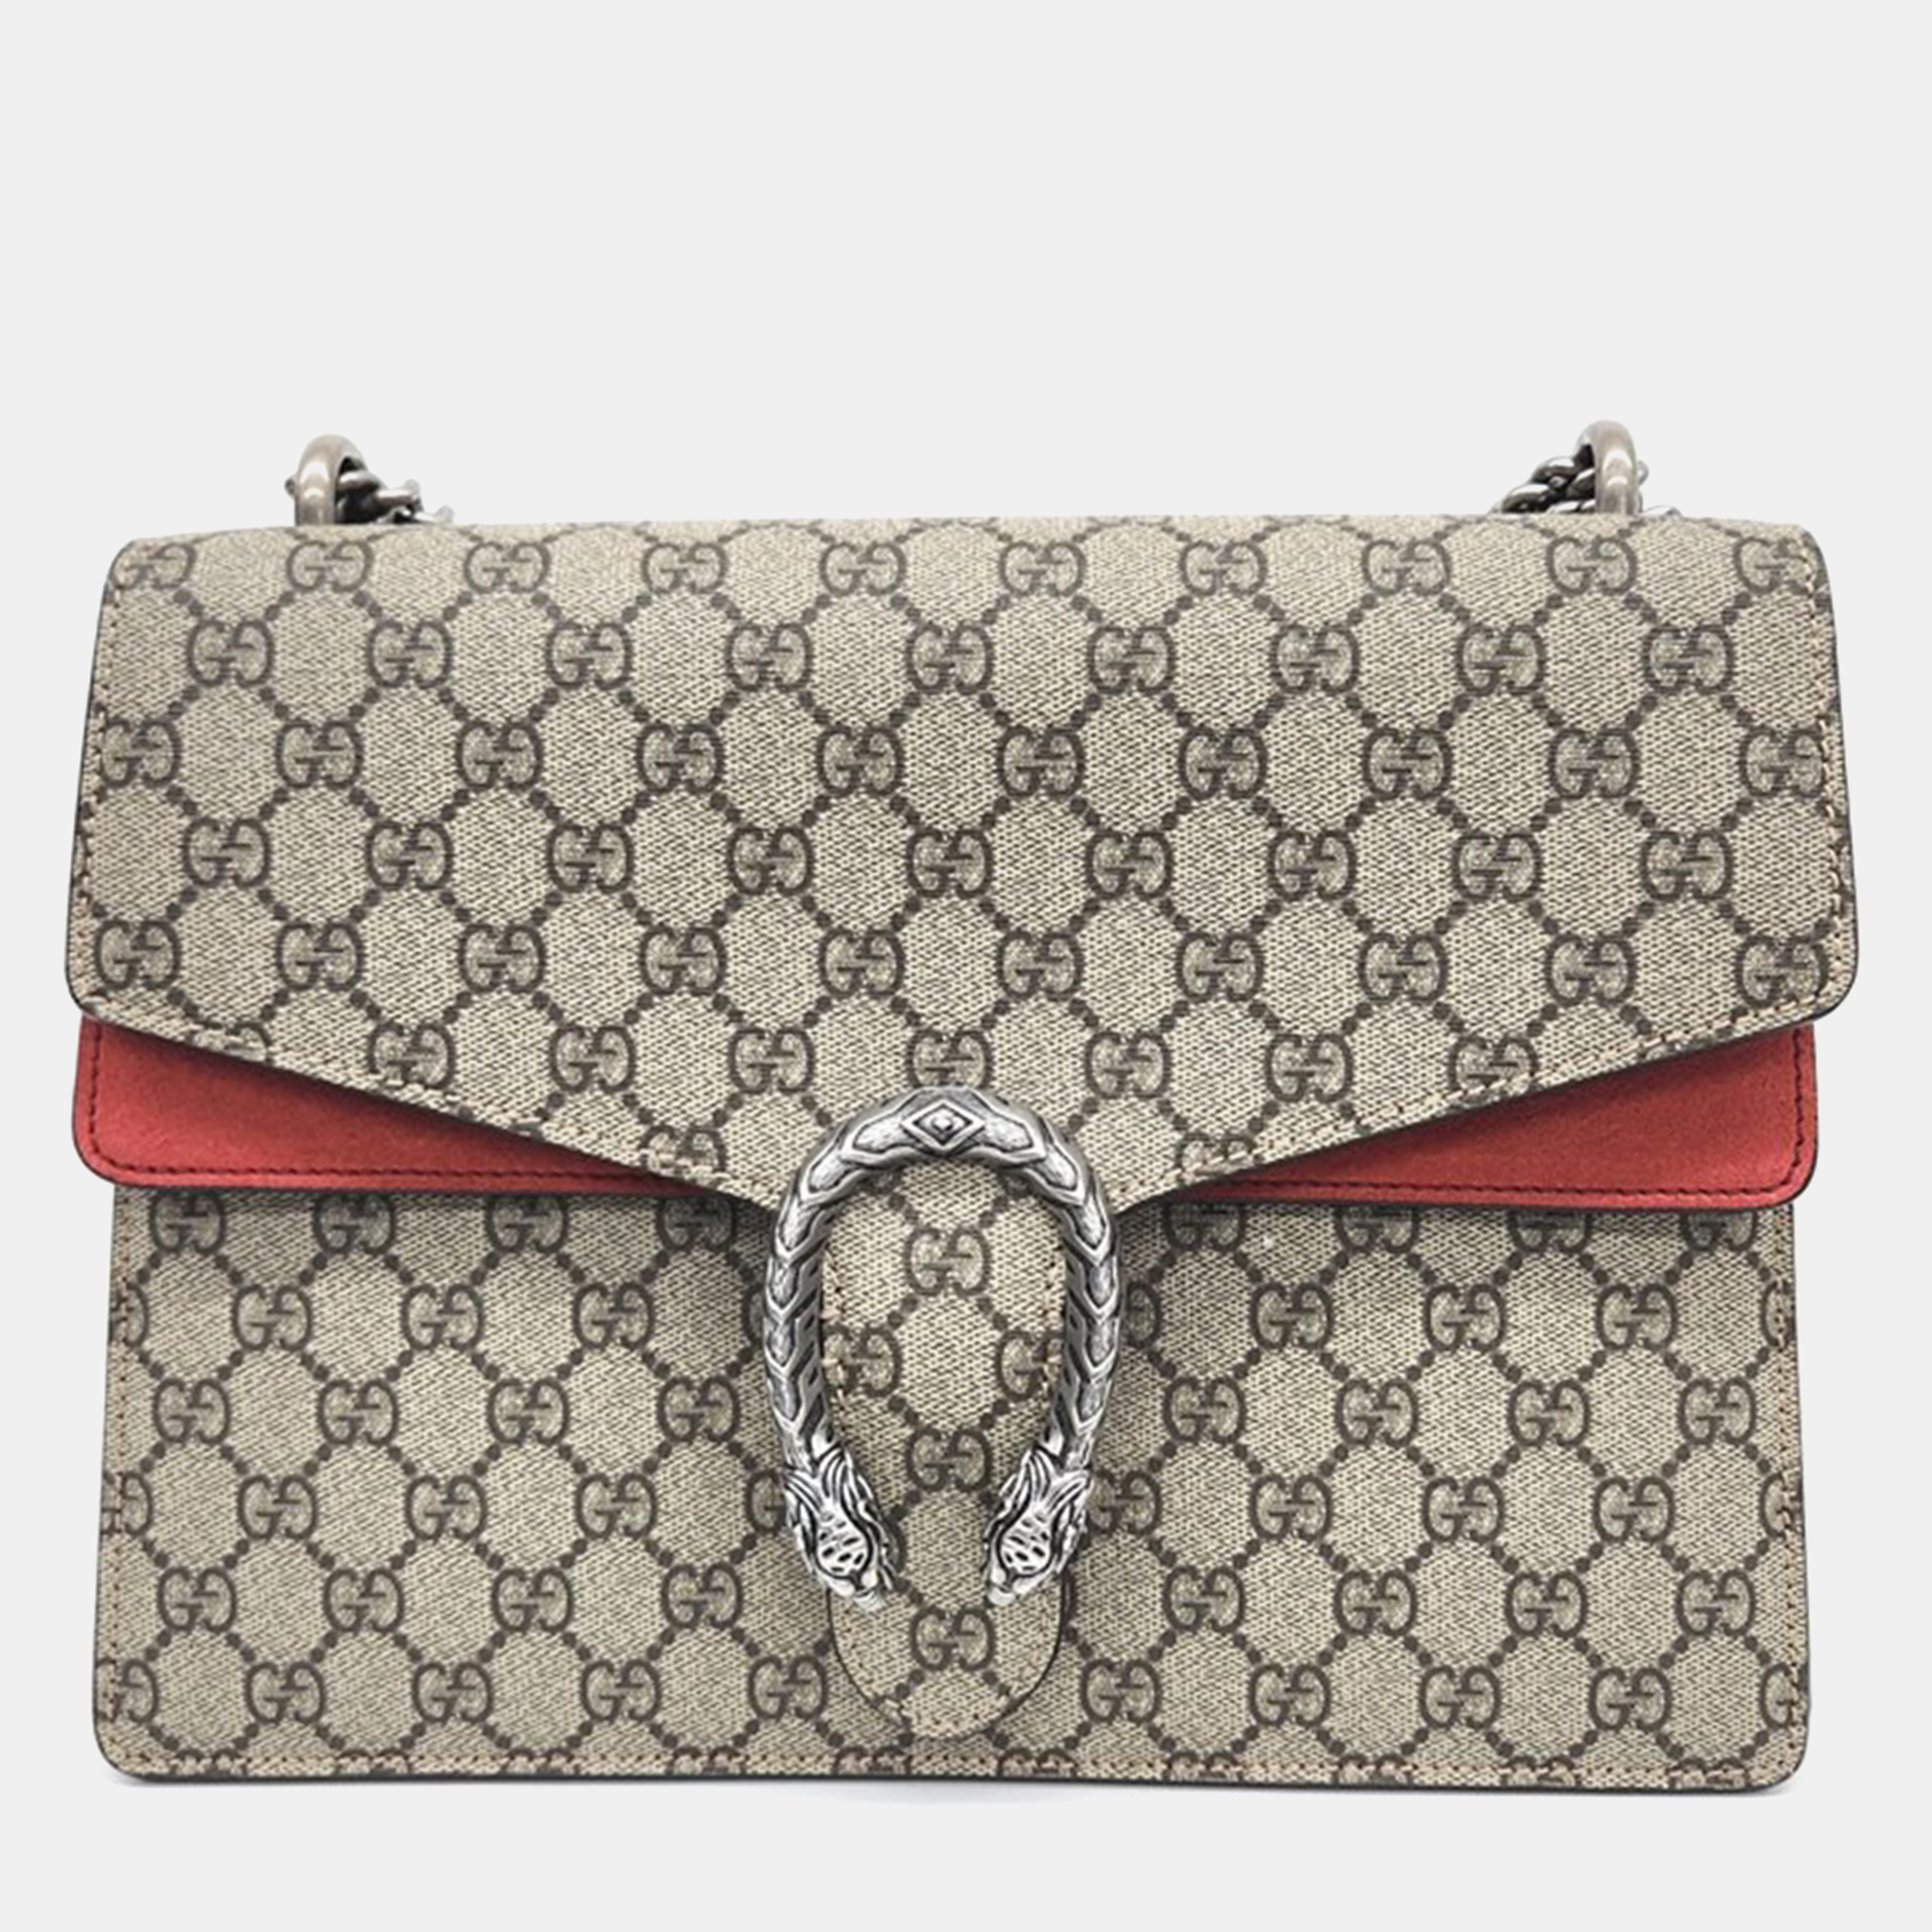 Gucci dionysus supreme chain shoulder bag (403348)